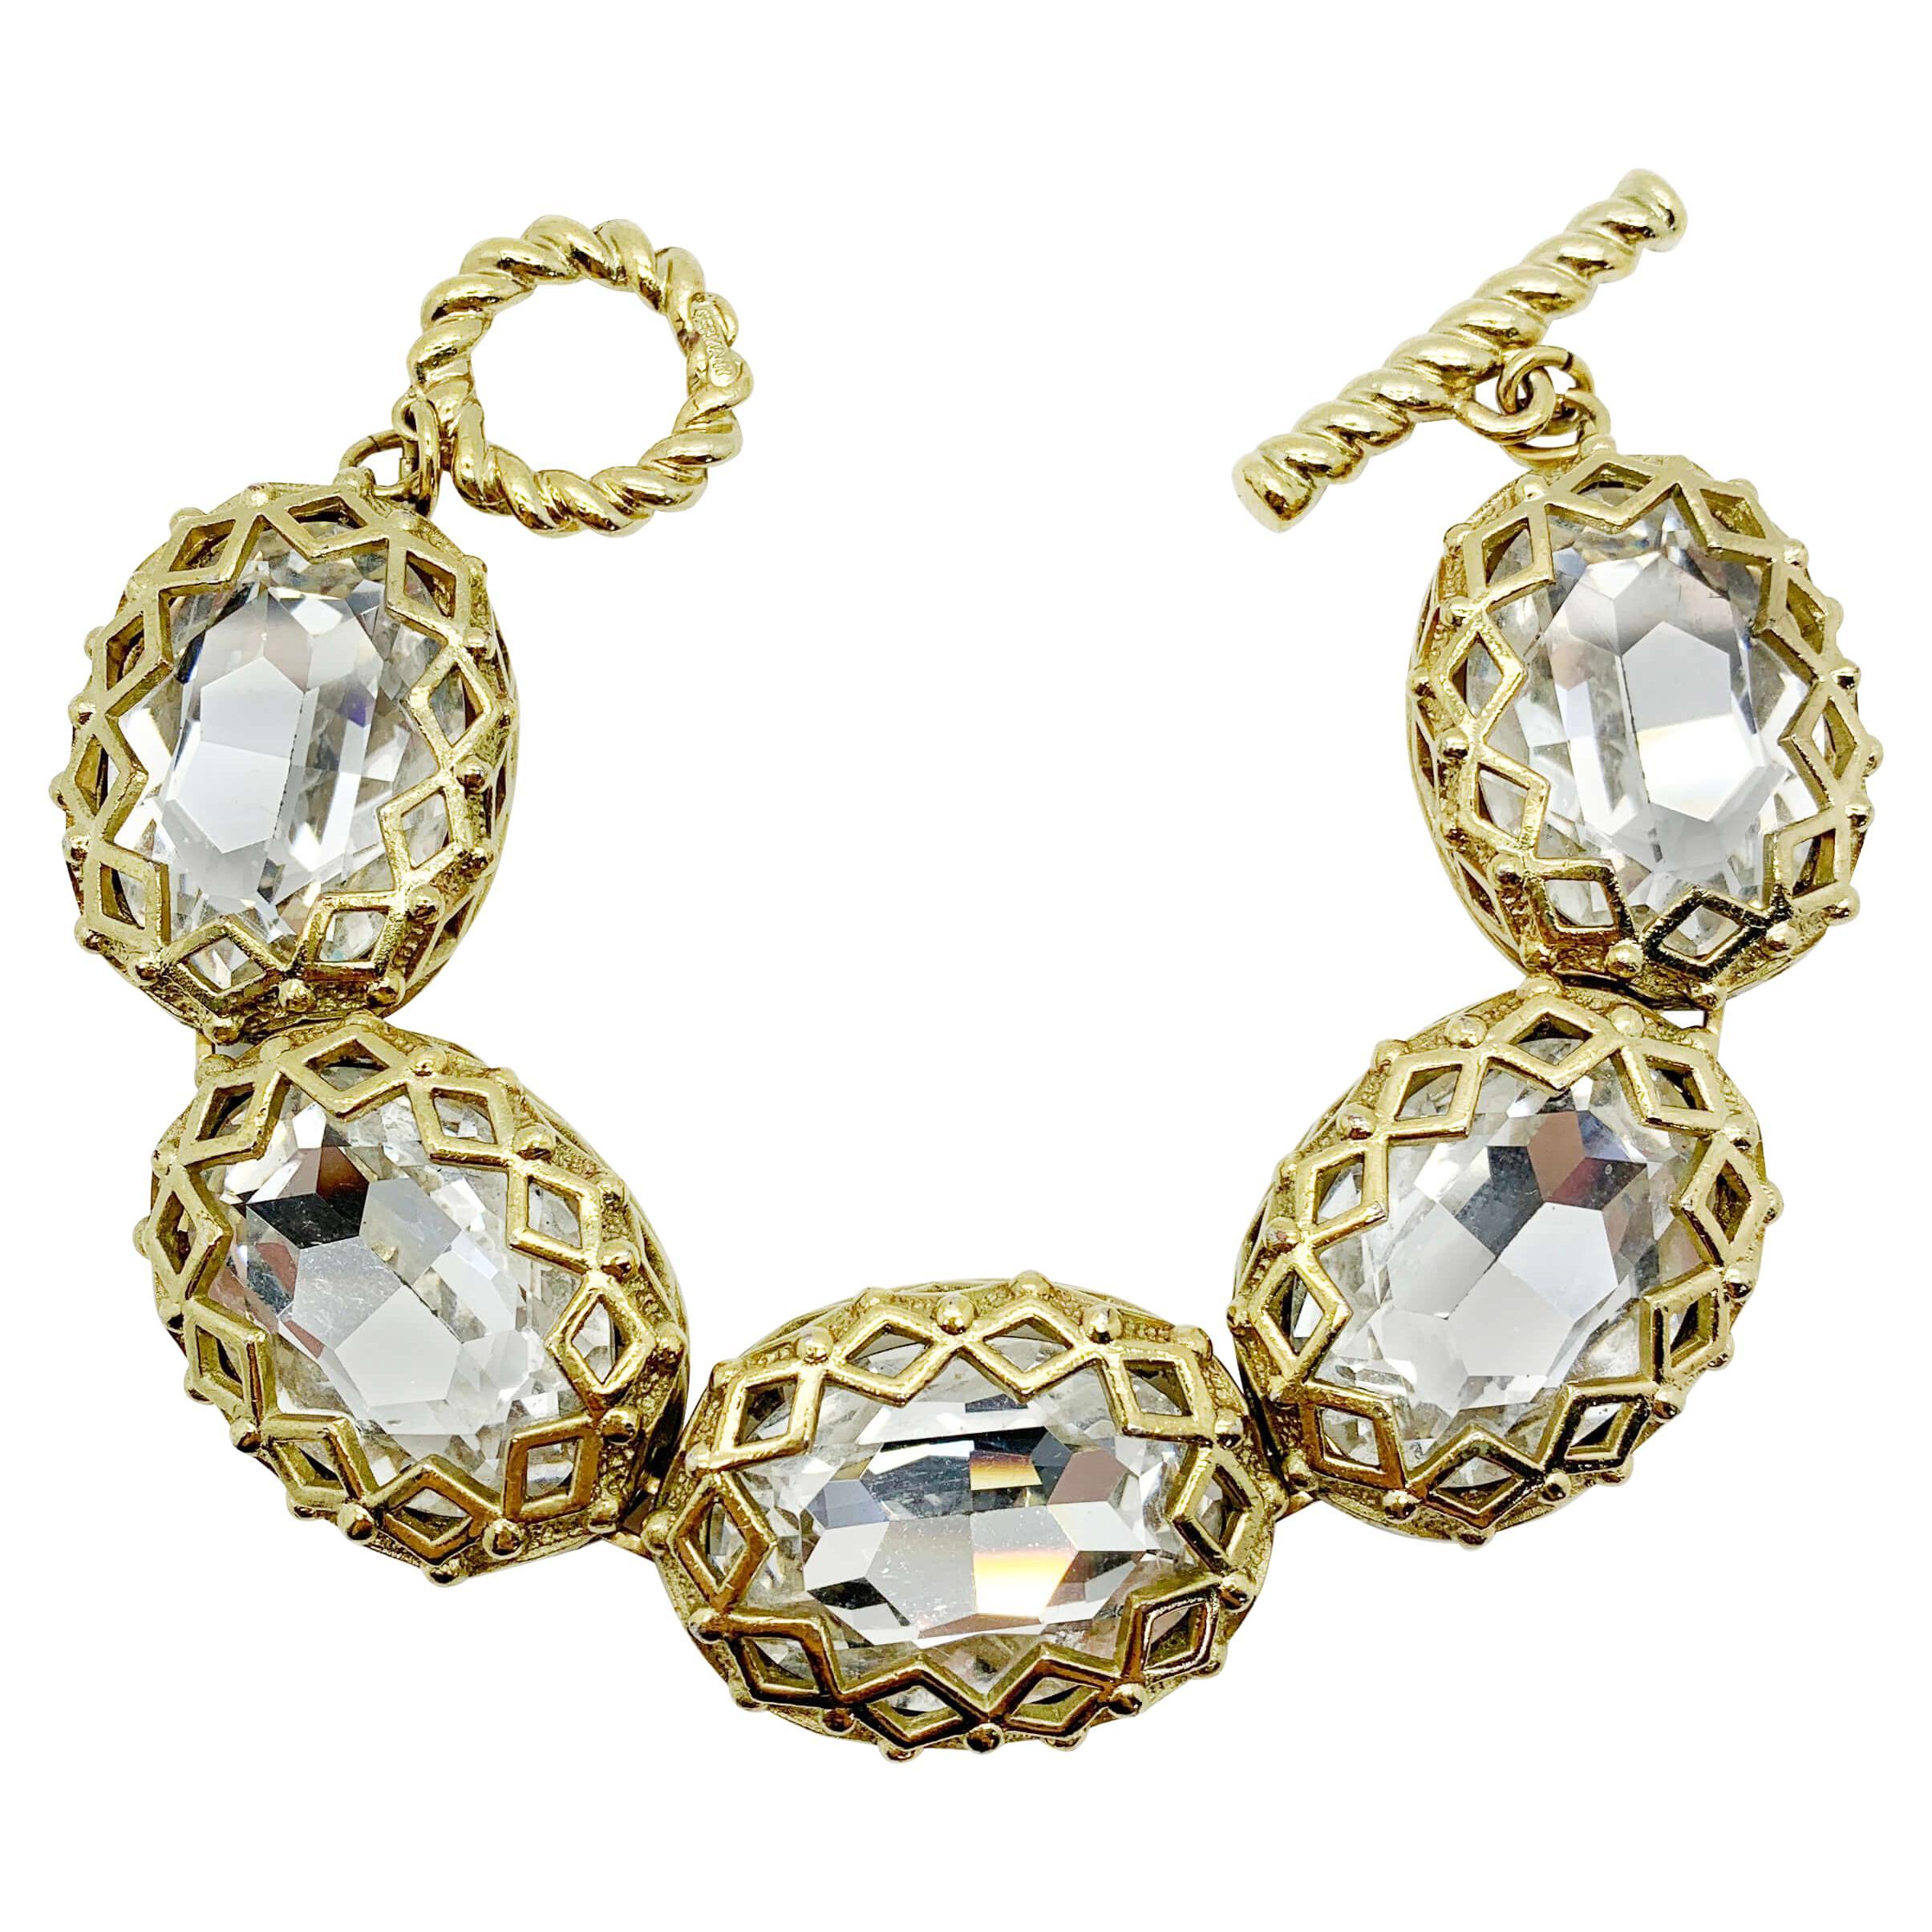 Vintage Christian Dior Crystal Headlight Bracelet 1980s